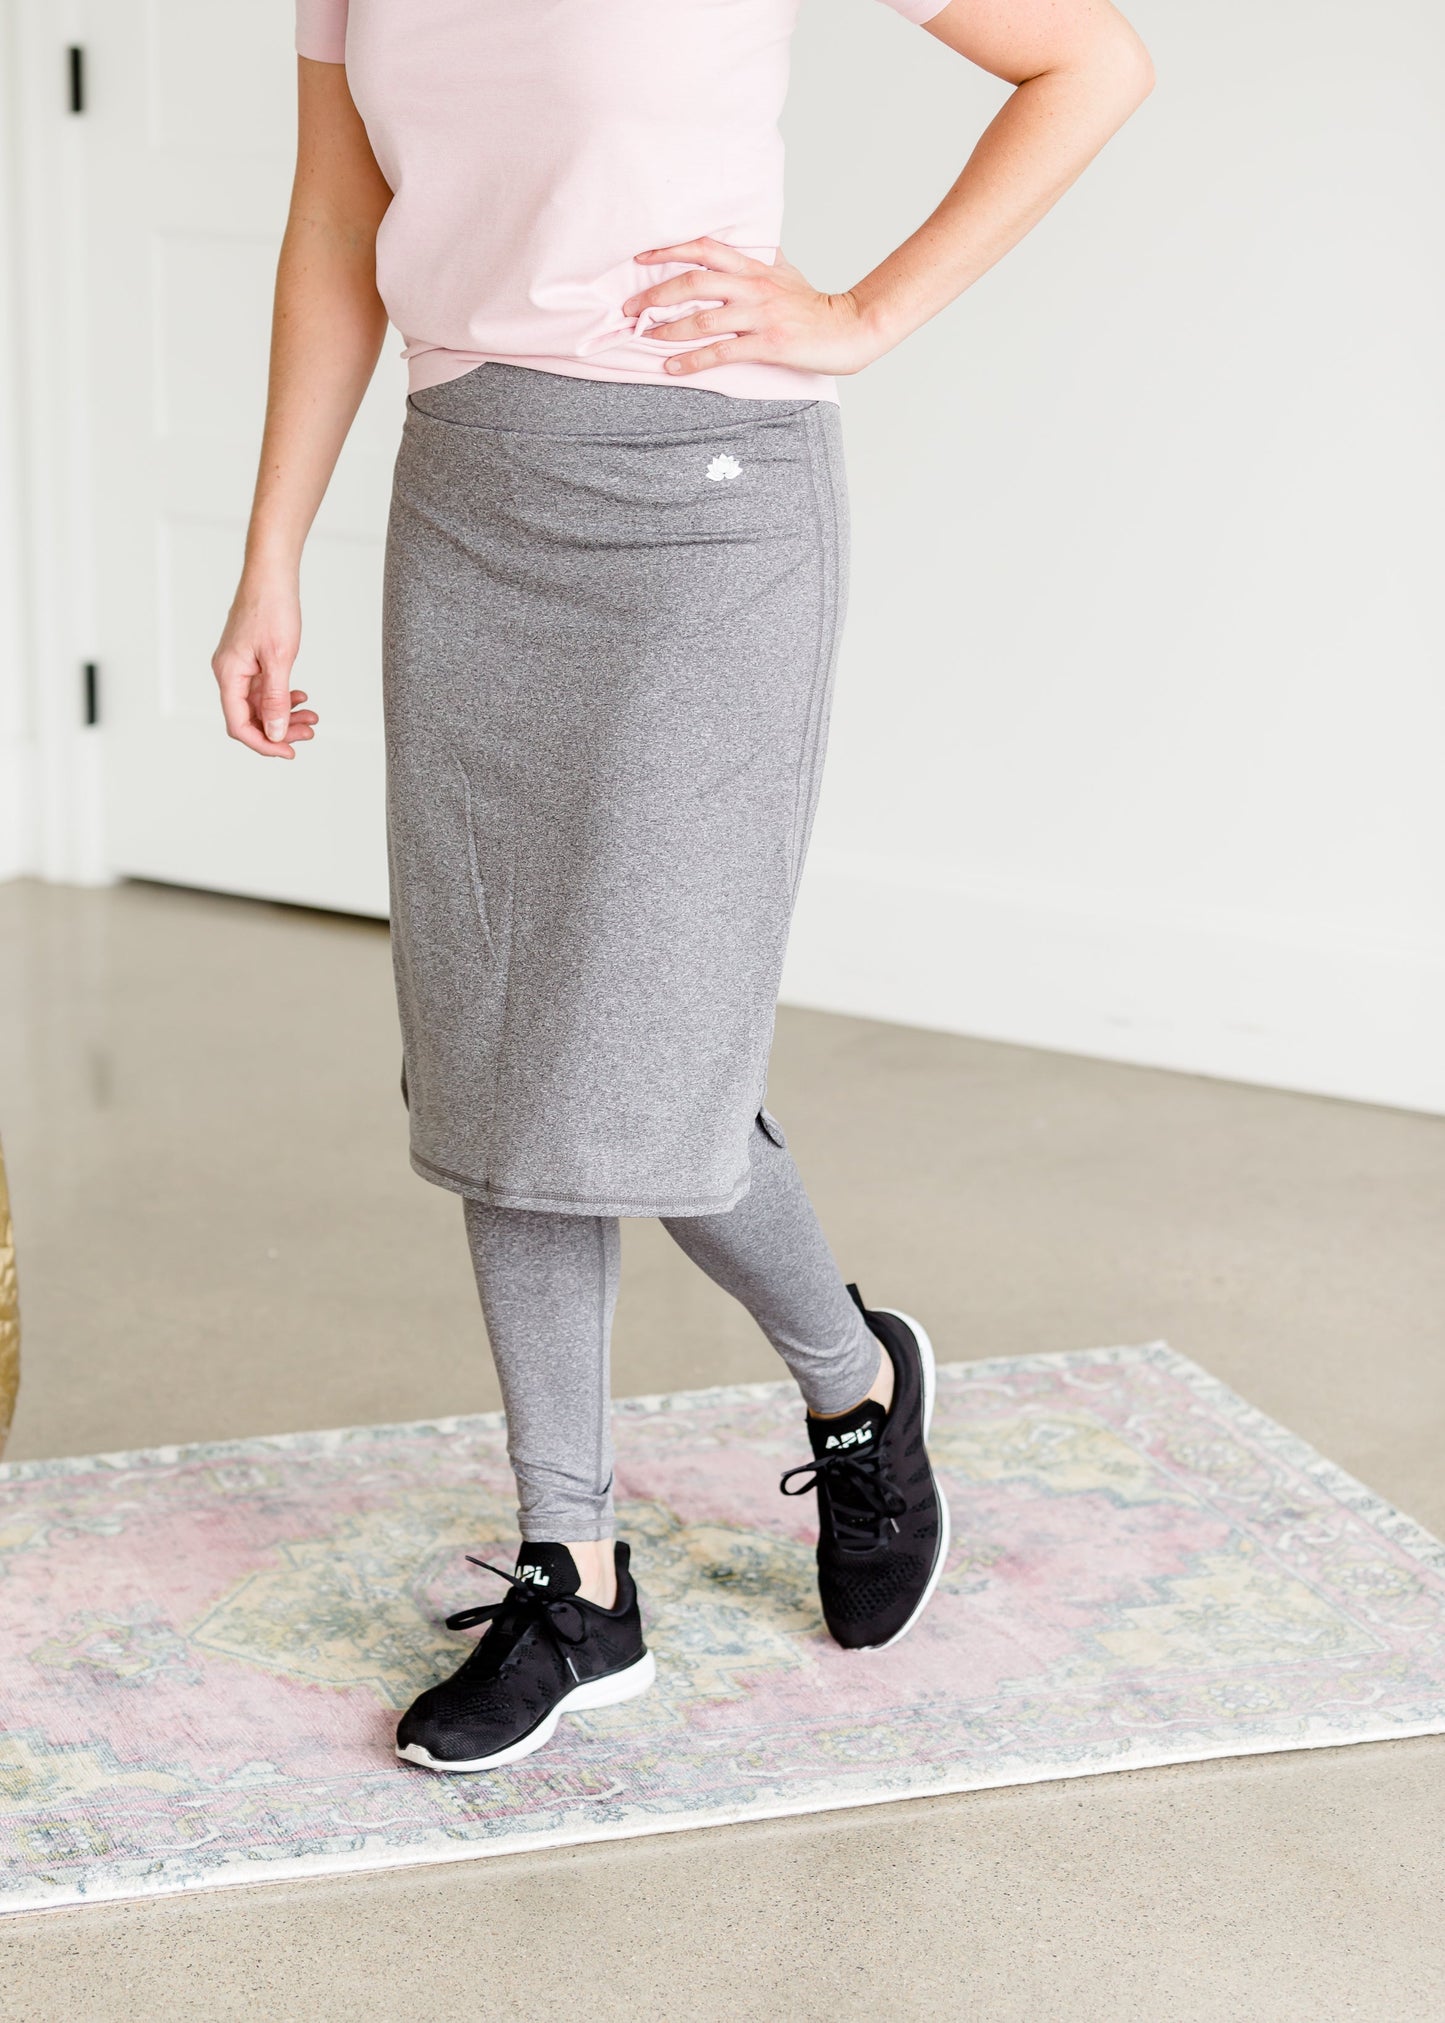 Snoga Long Shirttail Heather Gray Sport Skirt - FINAL SALE Activewear